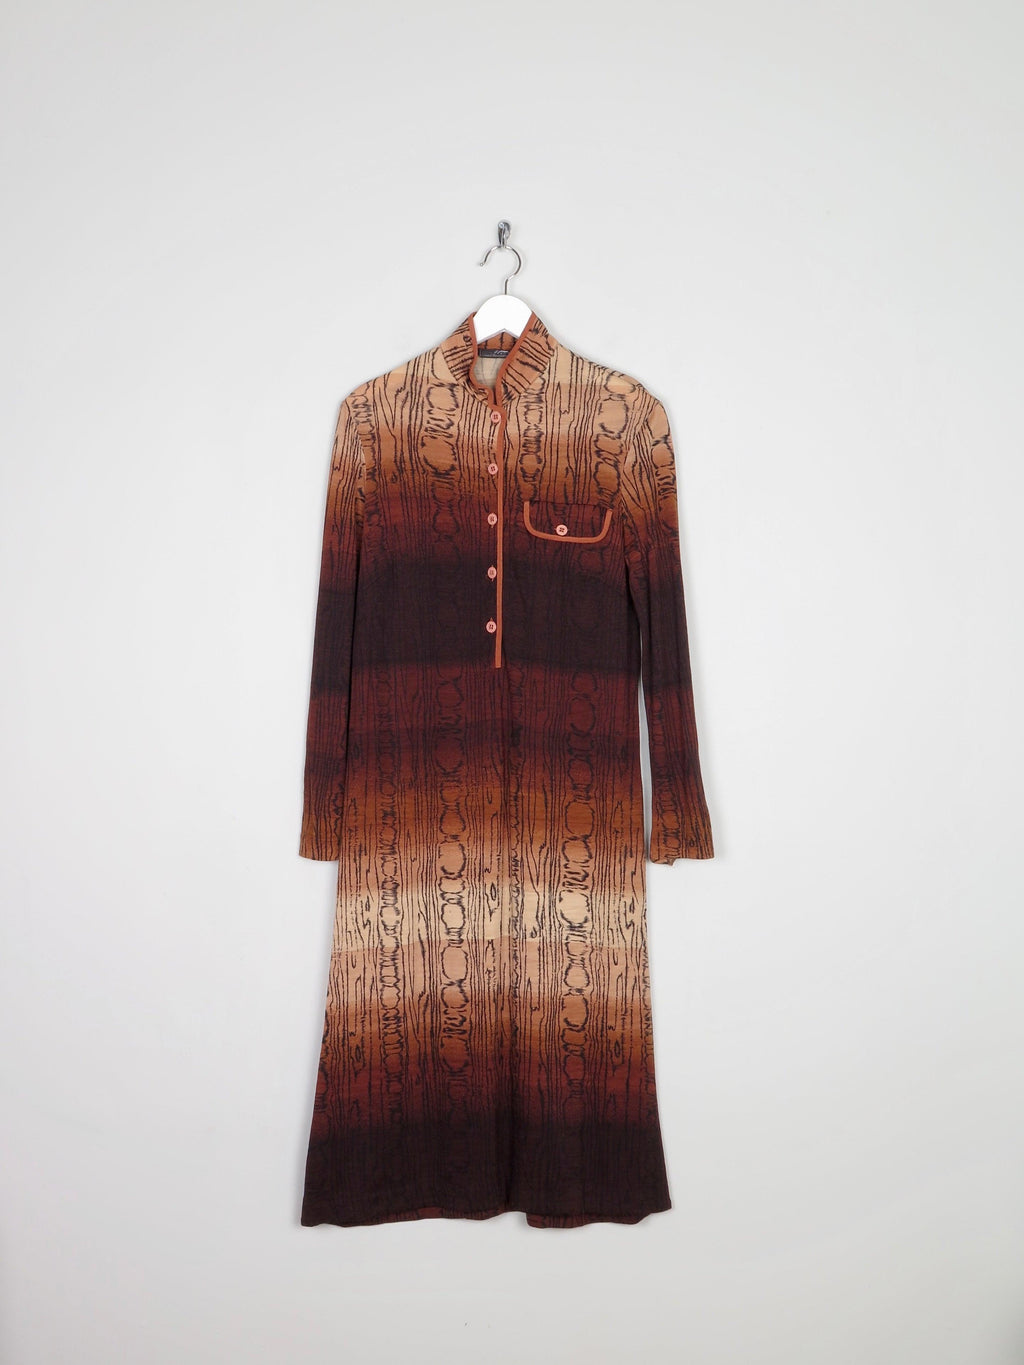 Italian Vintage 1970s Dress With Rust/Tan/Brown Tones 8/10 - The Harlequin